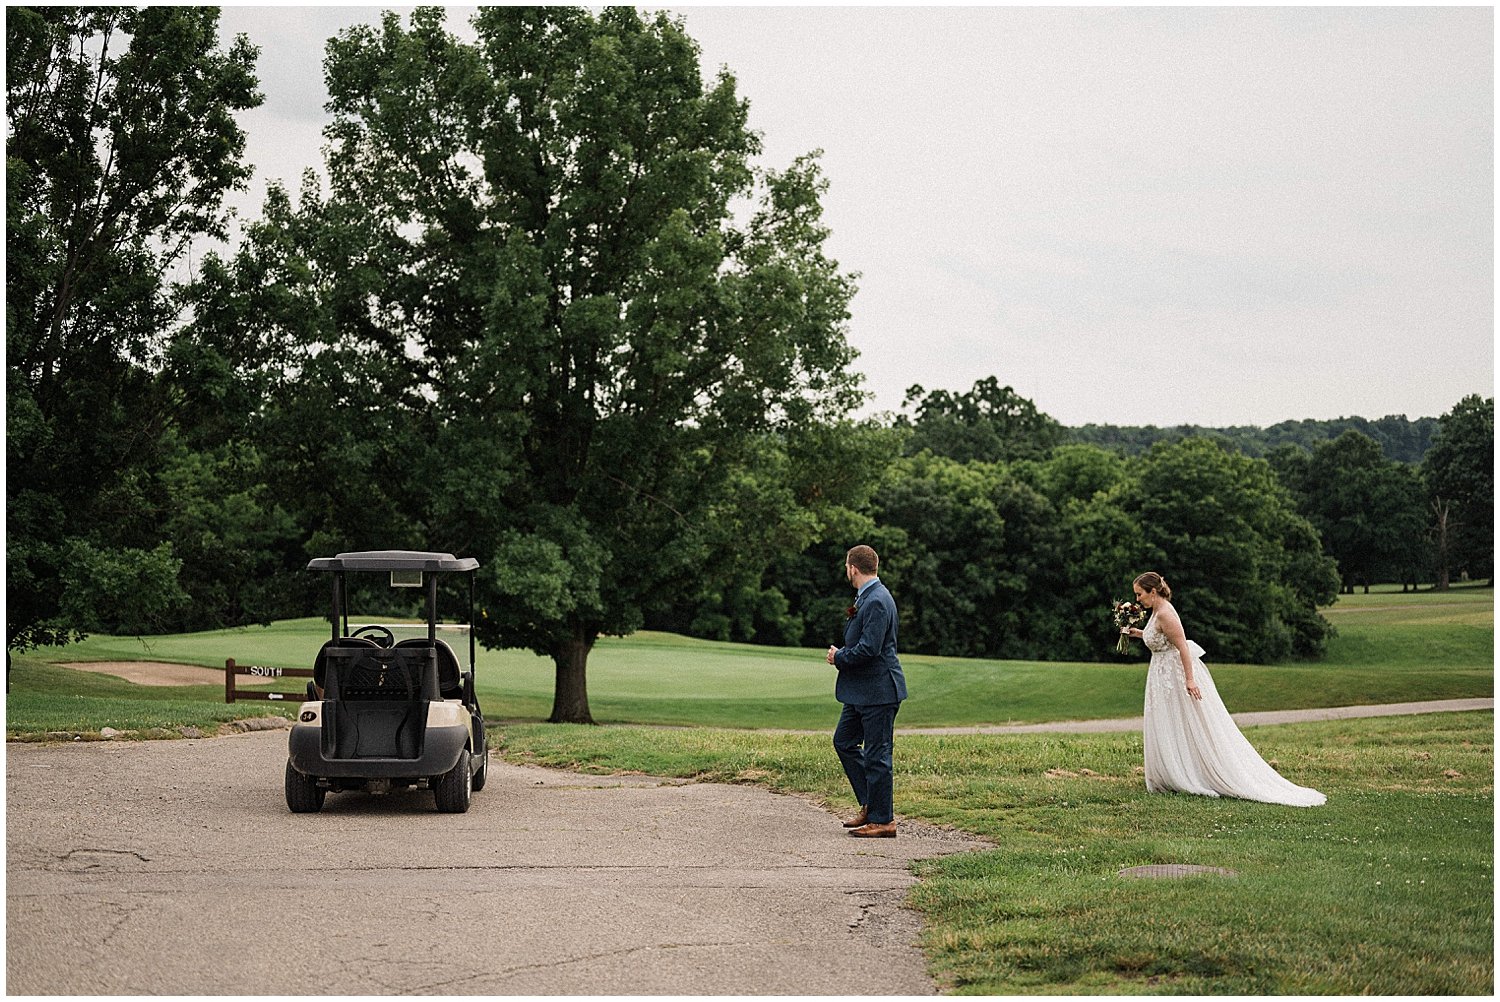 Glenview Golf Course &amp; Banquet Center | Cincinnati, Ohio Wedding